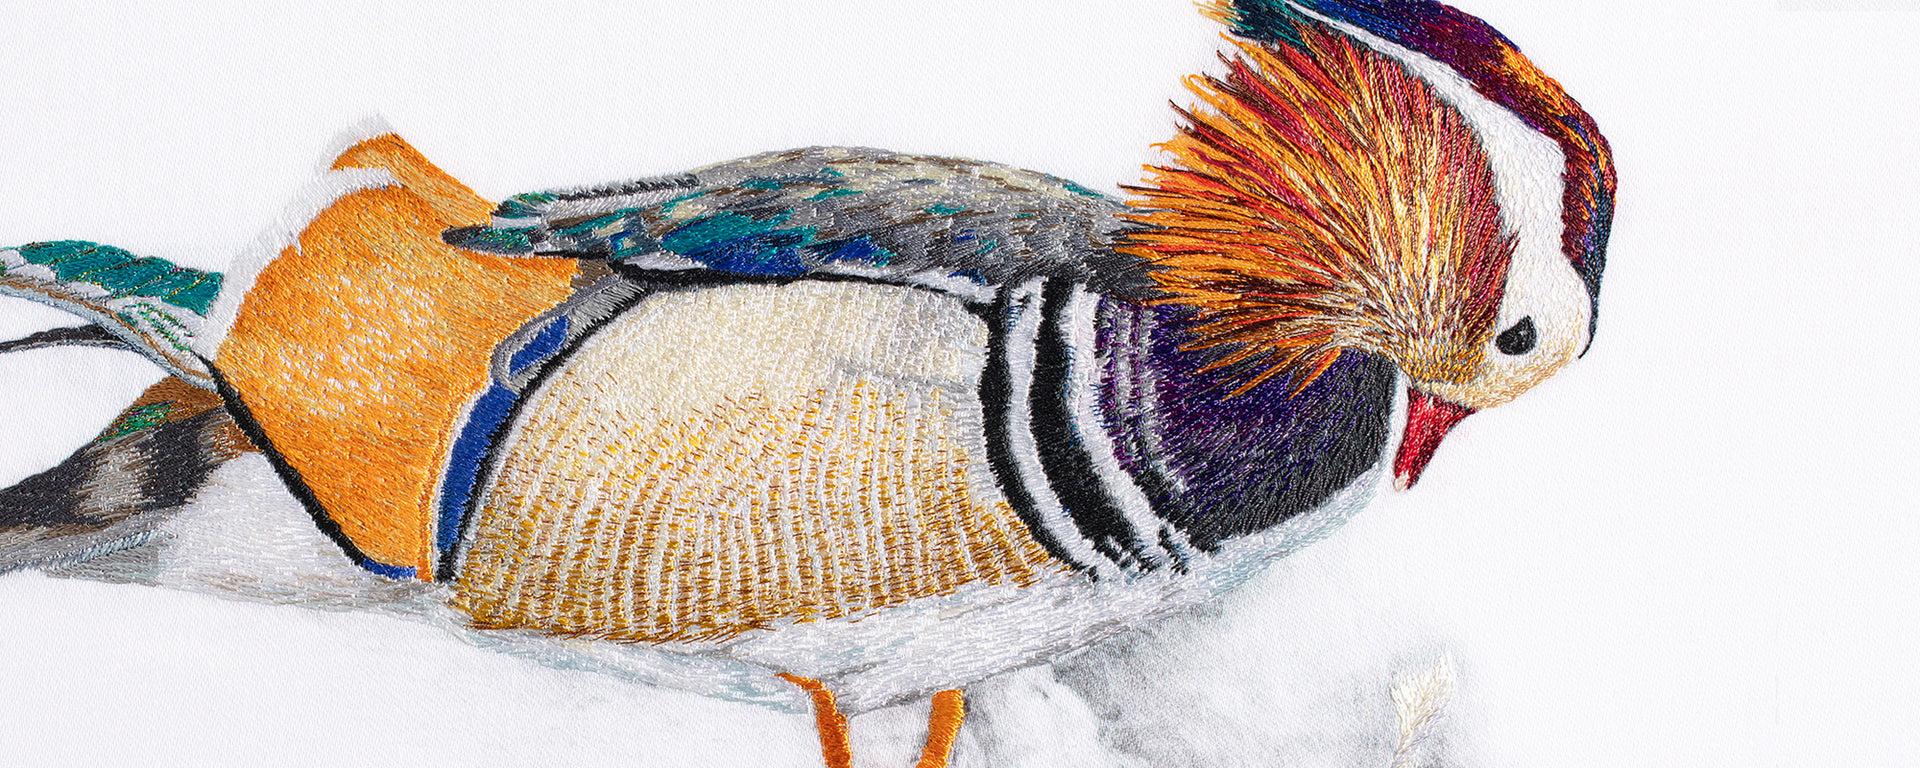 Hand embroidered mandarin duck artwork